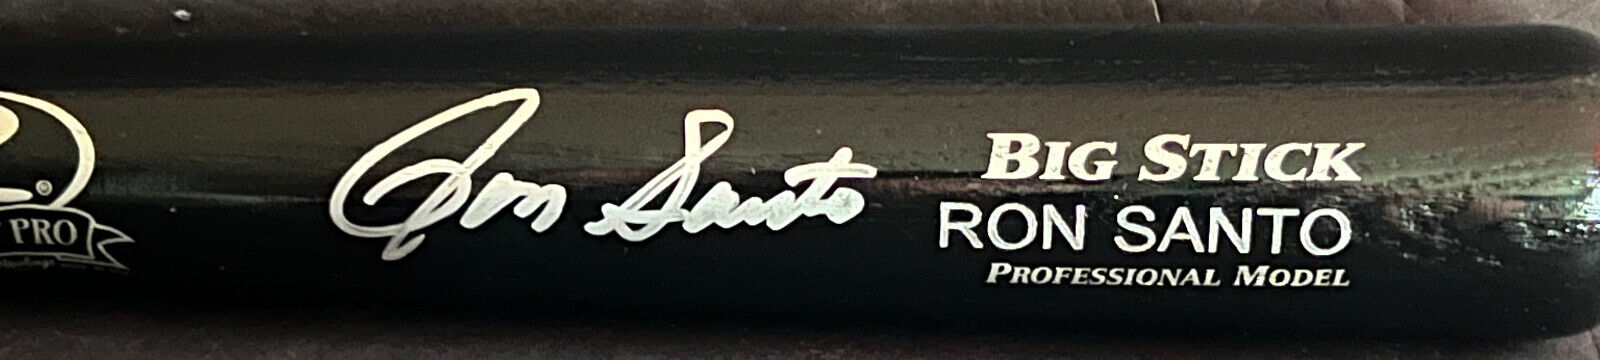 Ron Santo Cubs White Sox Autographed Signed Bat Pro Model Beckett COA Black